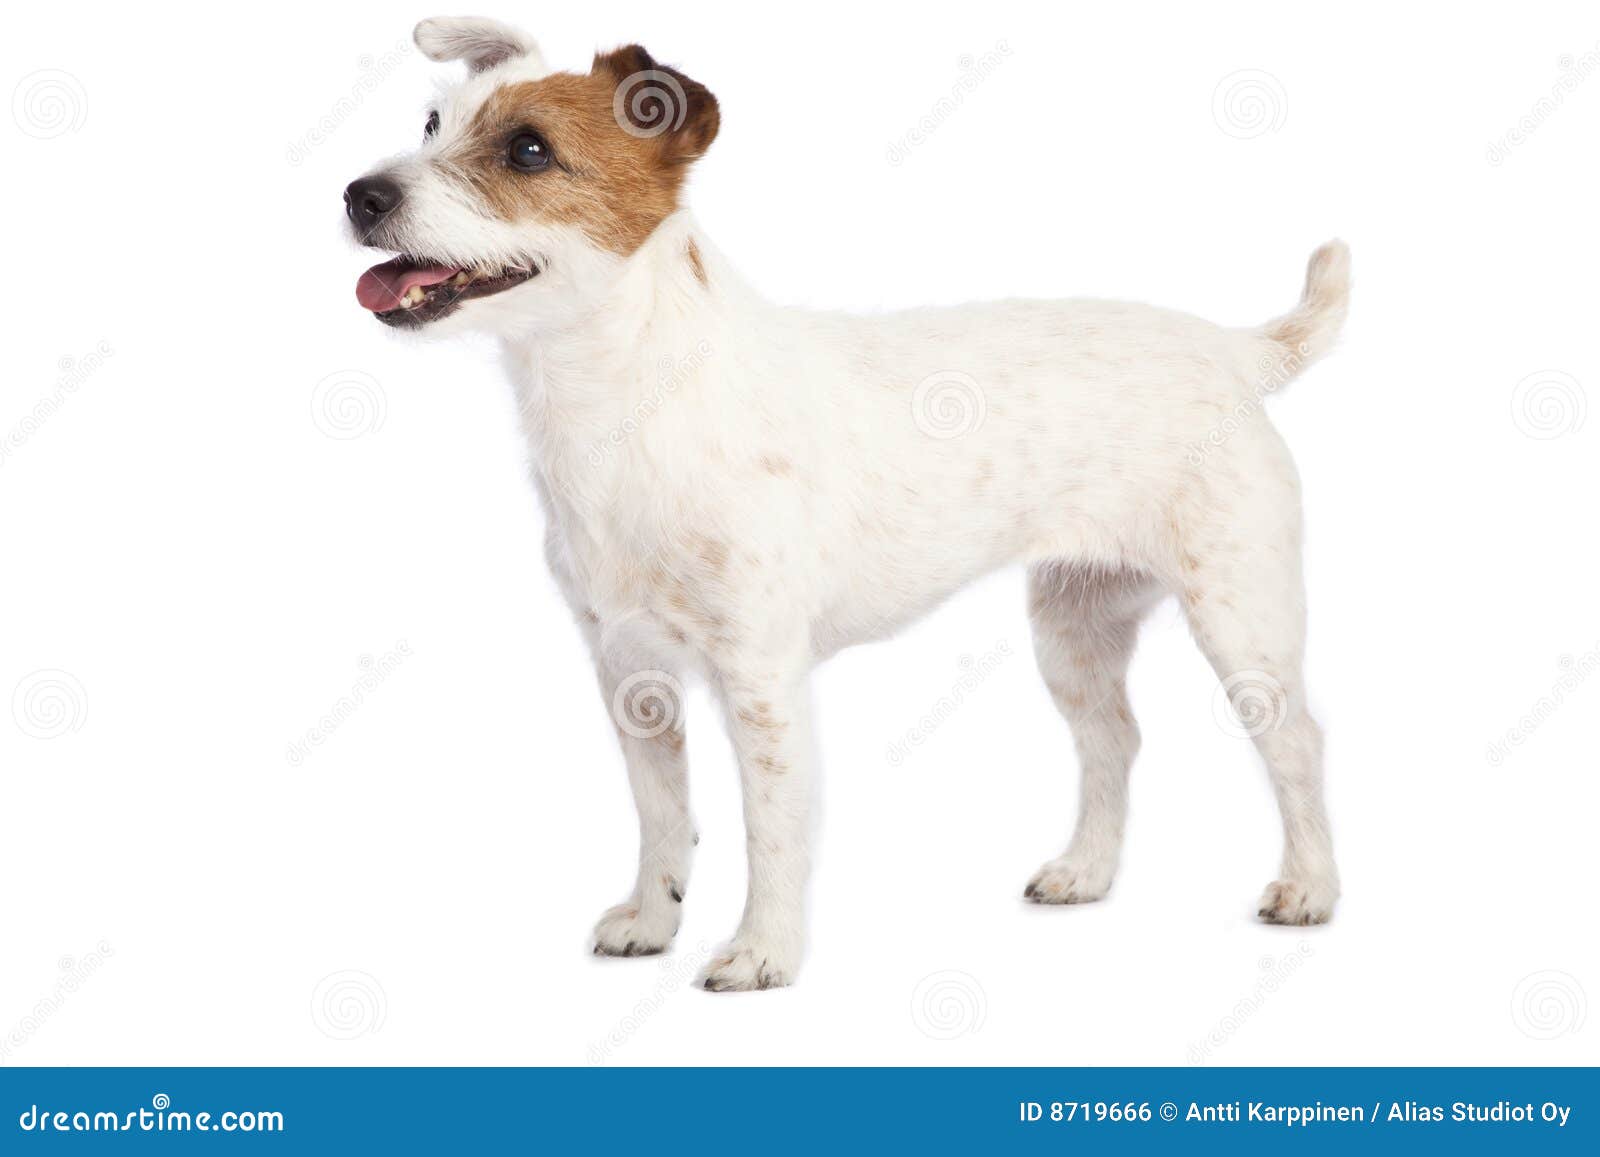 jack russell terrier standing